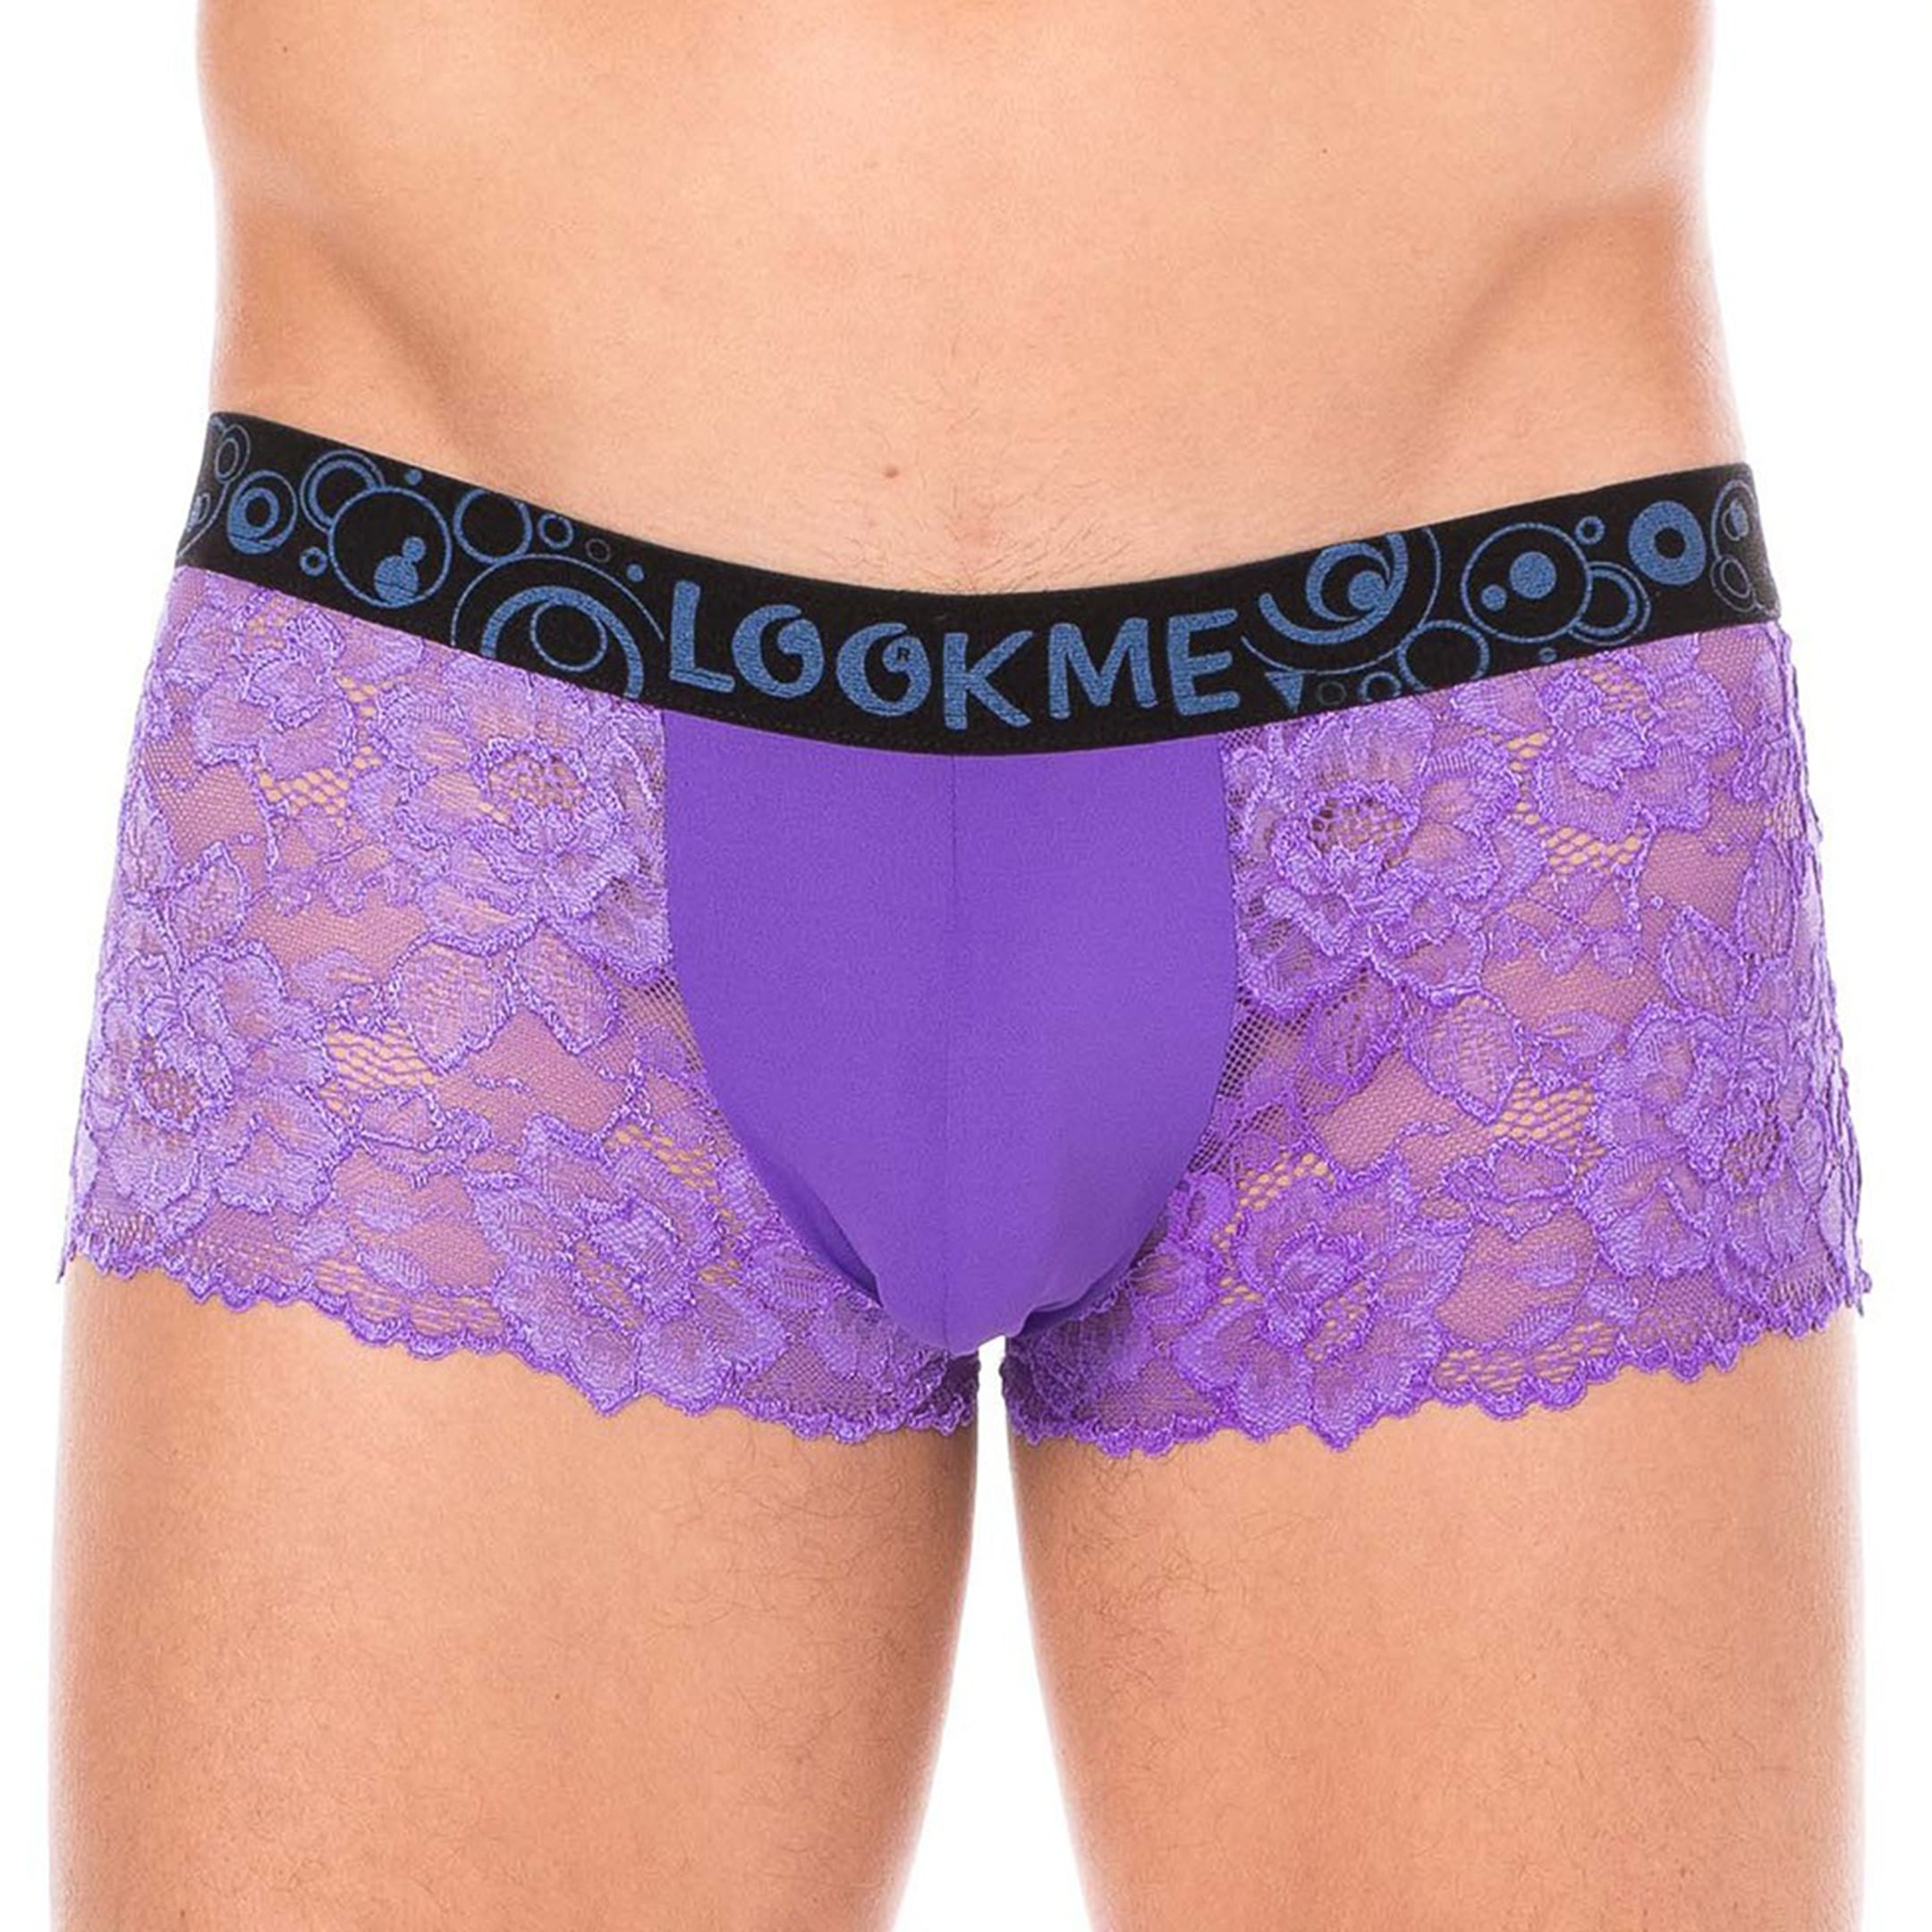 Lookme Lace Trunks - Purple